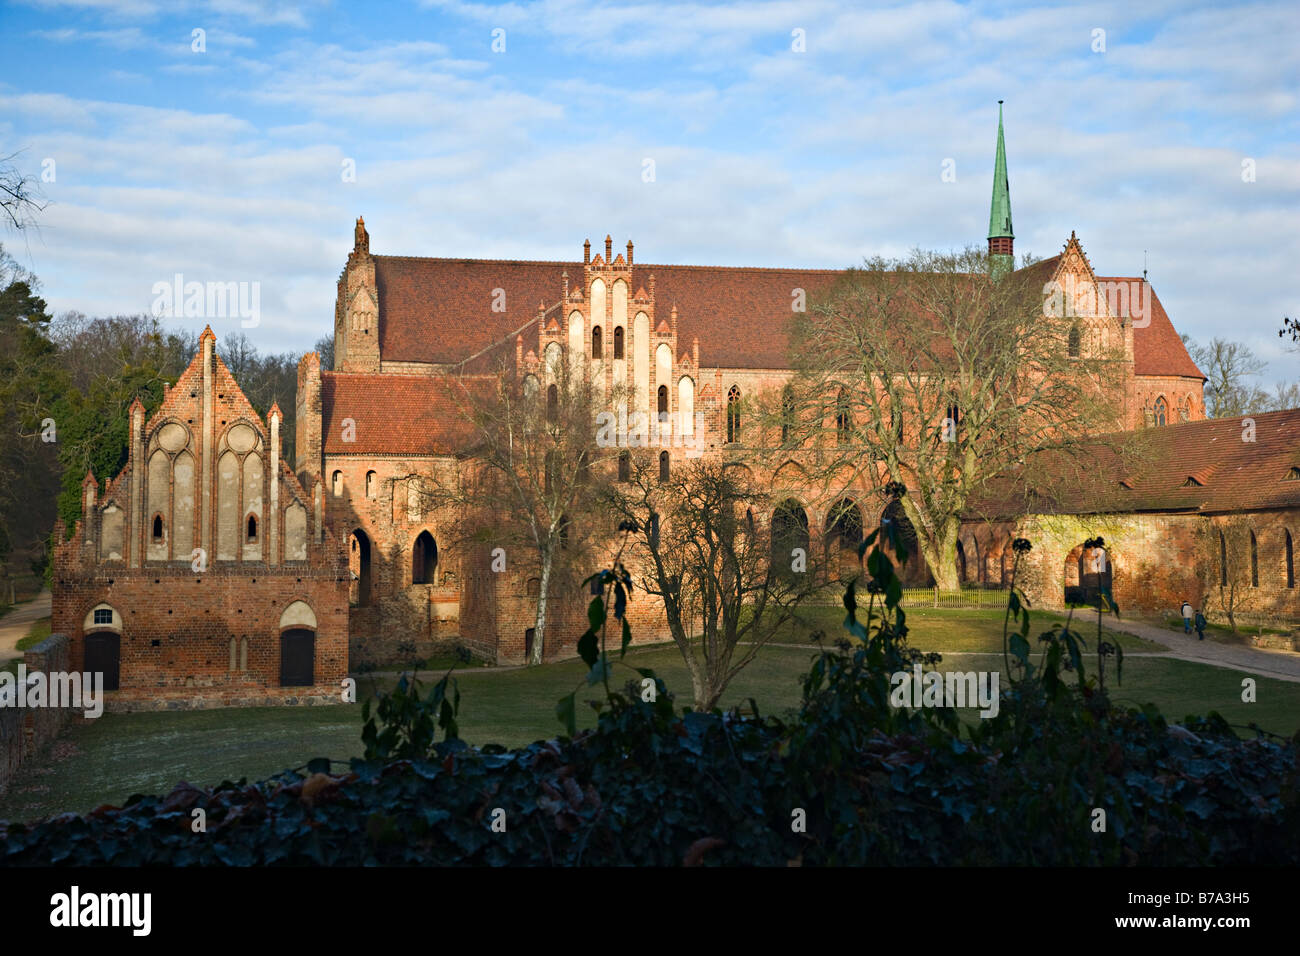 Kloster Chorin (Chorin Monastery), Germany, Europe Stock Photo